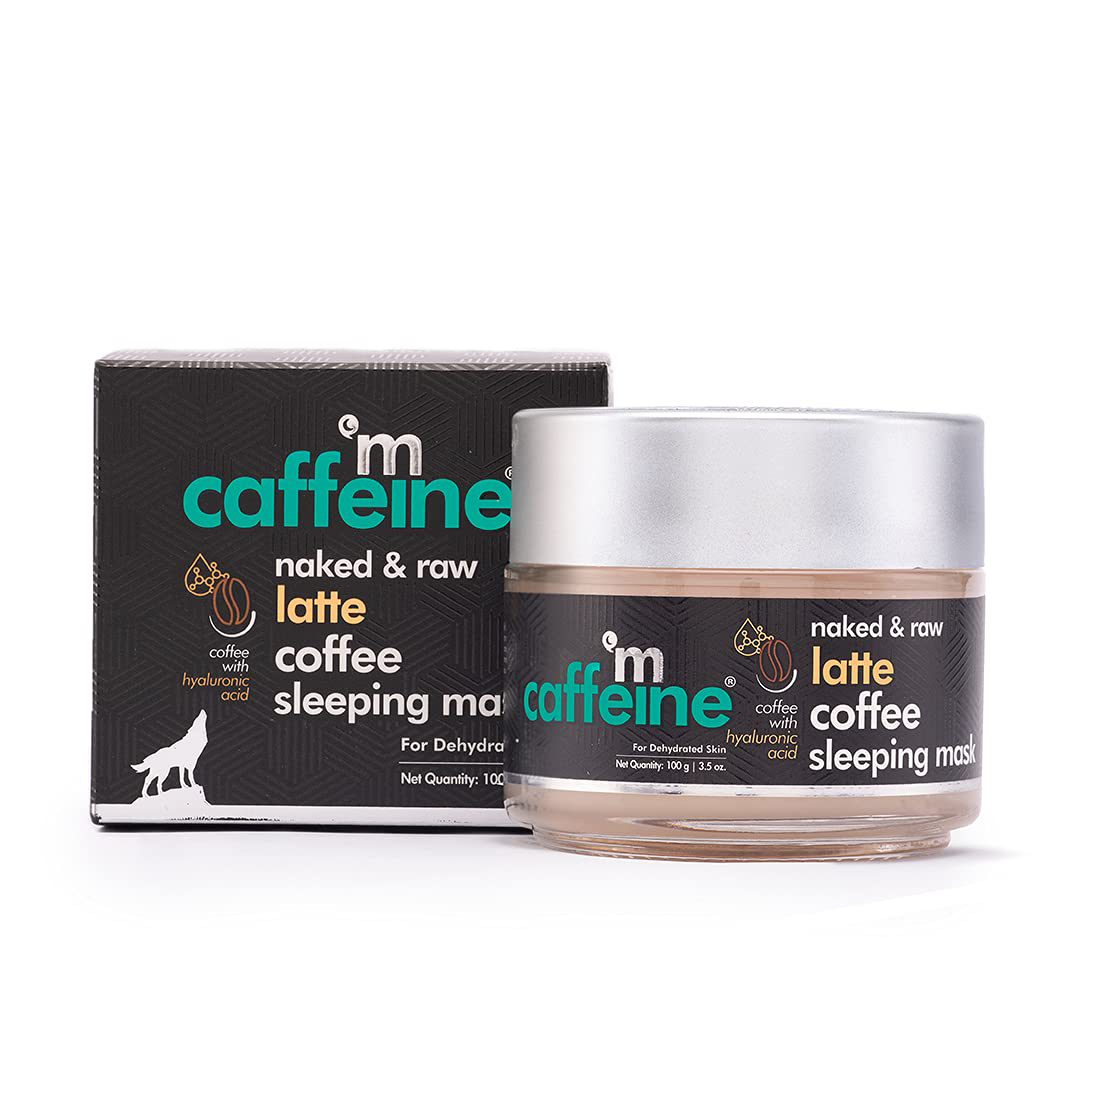 mCaffeine Naked & Raw Latte Coffee Sleeping Mask (100g )